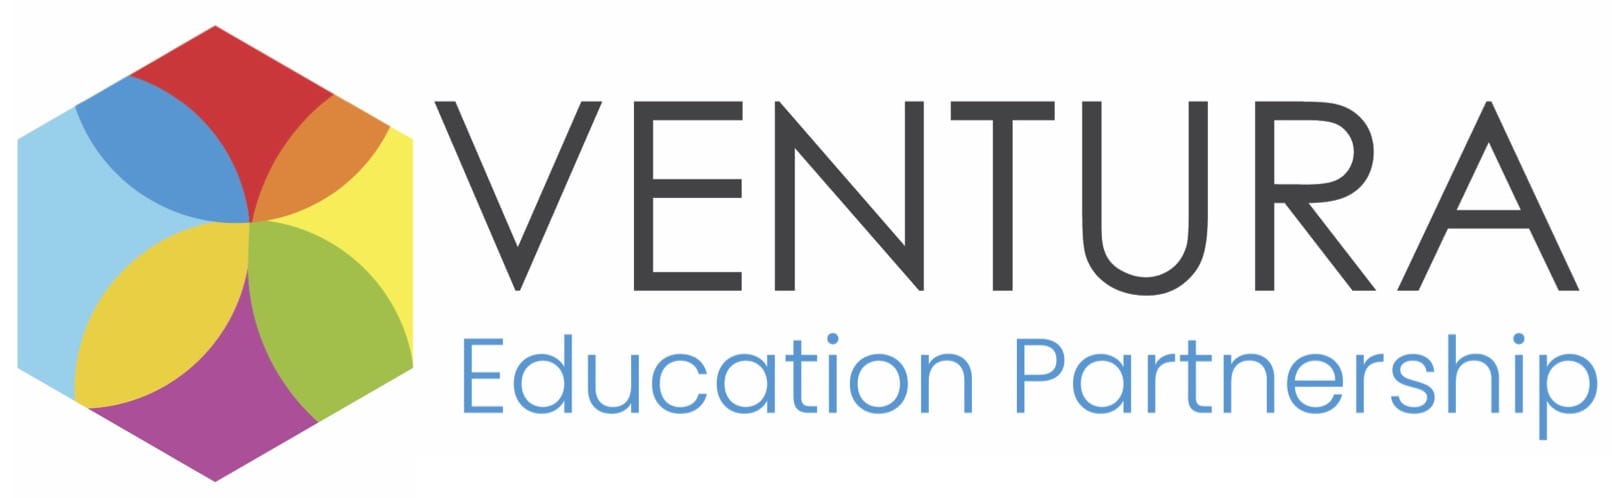 Ventura Education Partnership